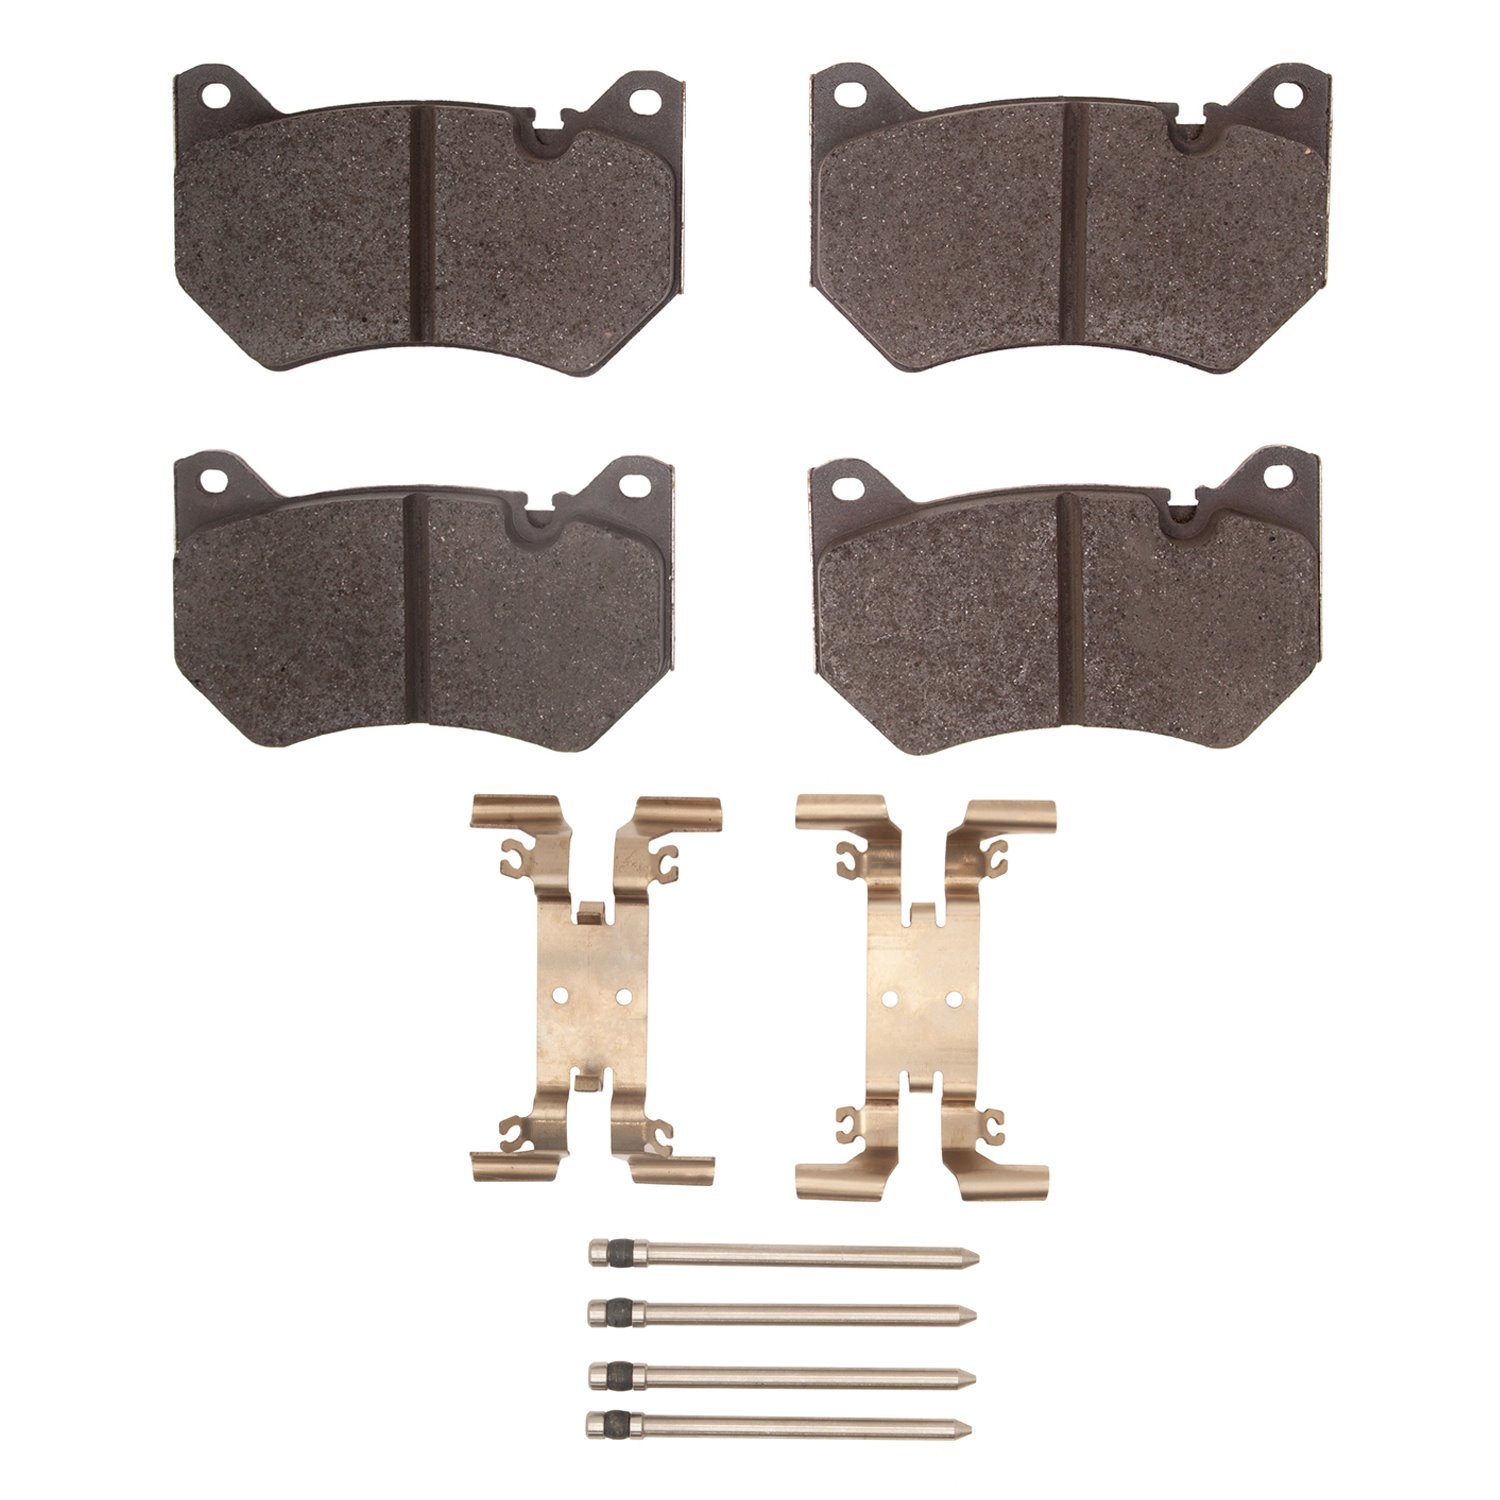 1310-2139-01 3000-Series Ceramic Brake Pads & Hardware Kit, Fits Select Audi/Volkswagen, Position: Front